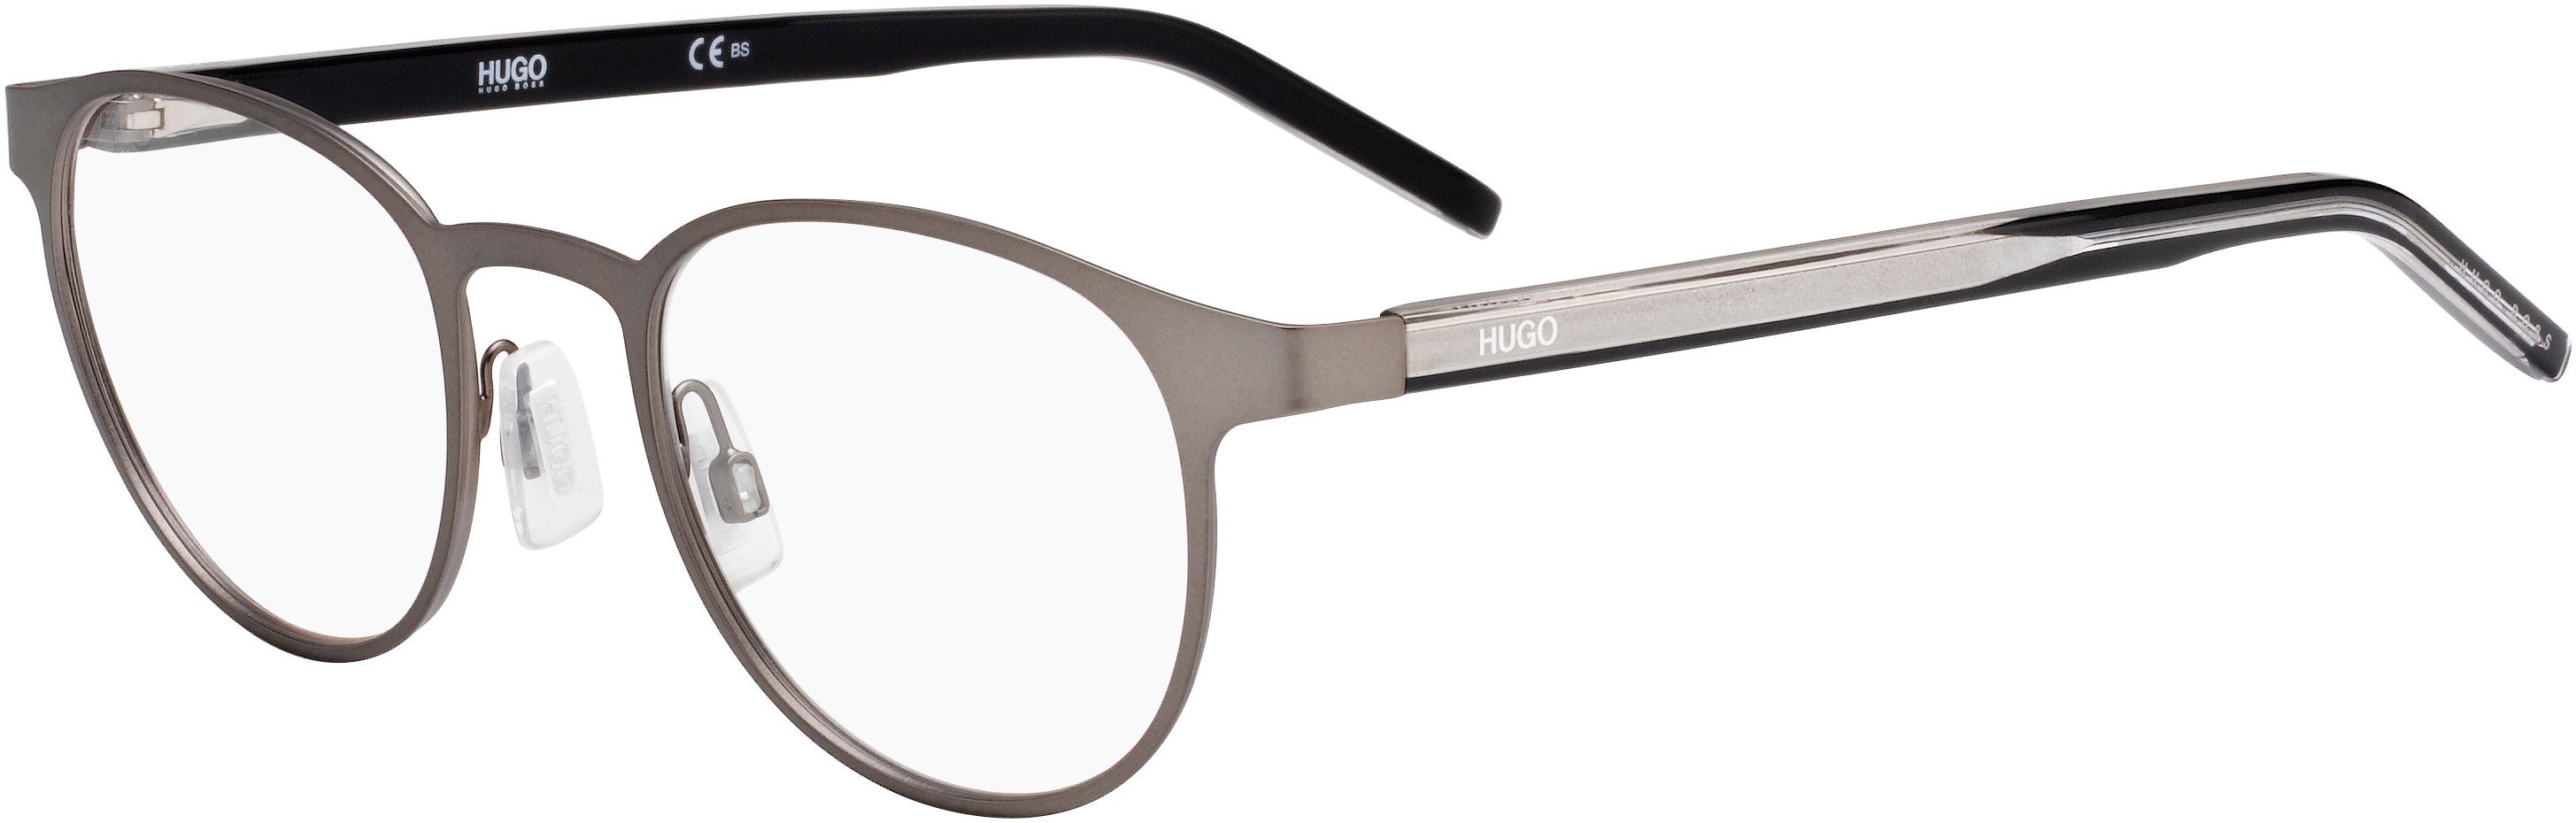 Hugo (hug) Hugo 1030 Oval Modified Eyeglasses 0R80-0R80  Semi Matte Dark Ruthenium (00 Demo Lens)